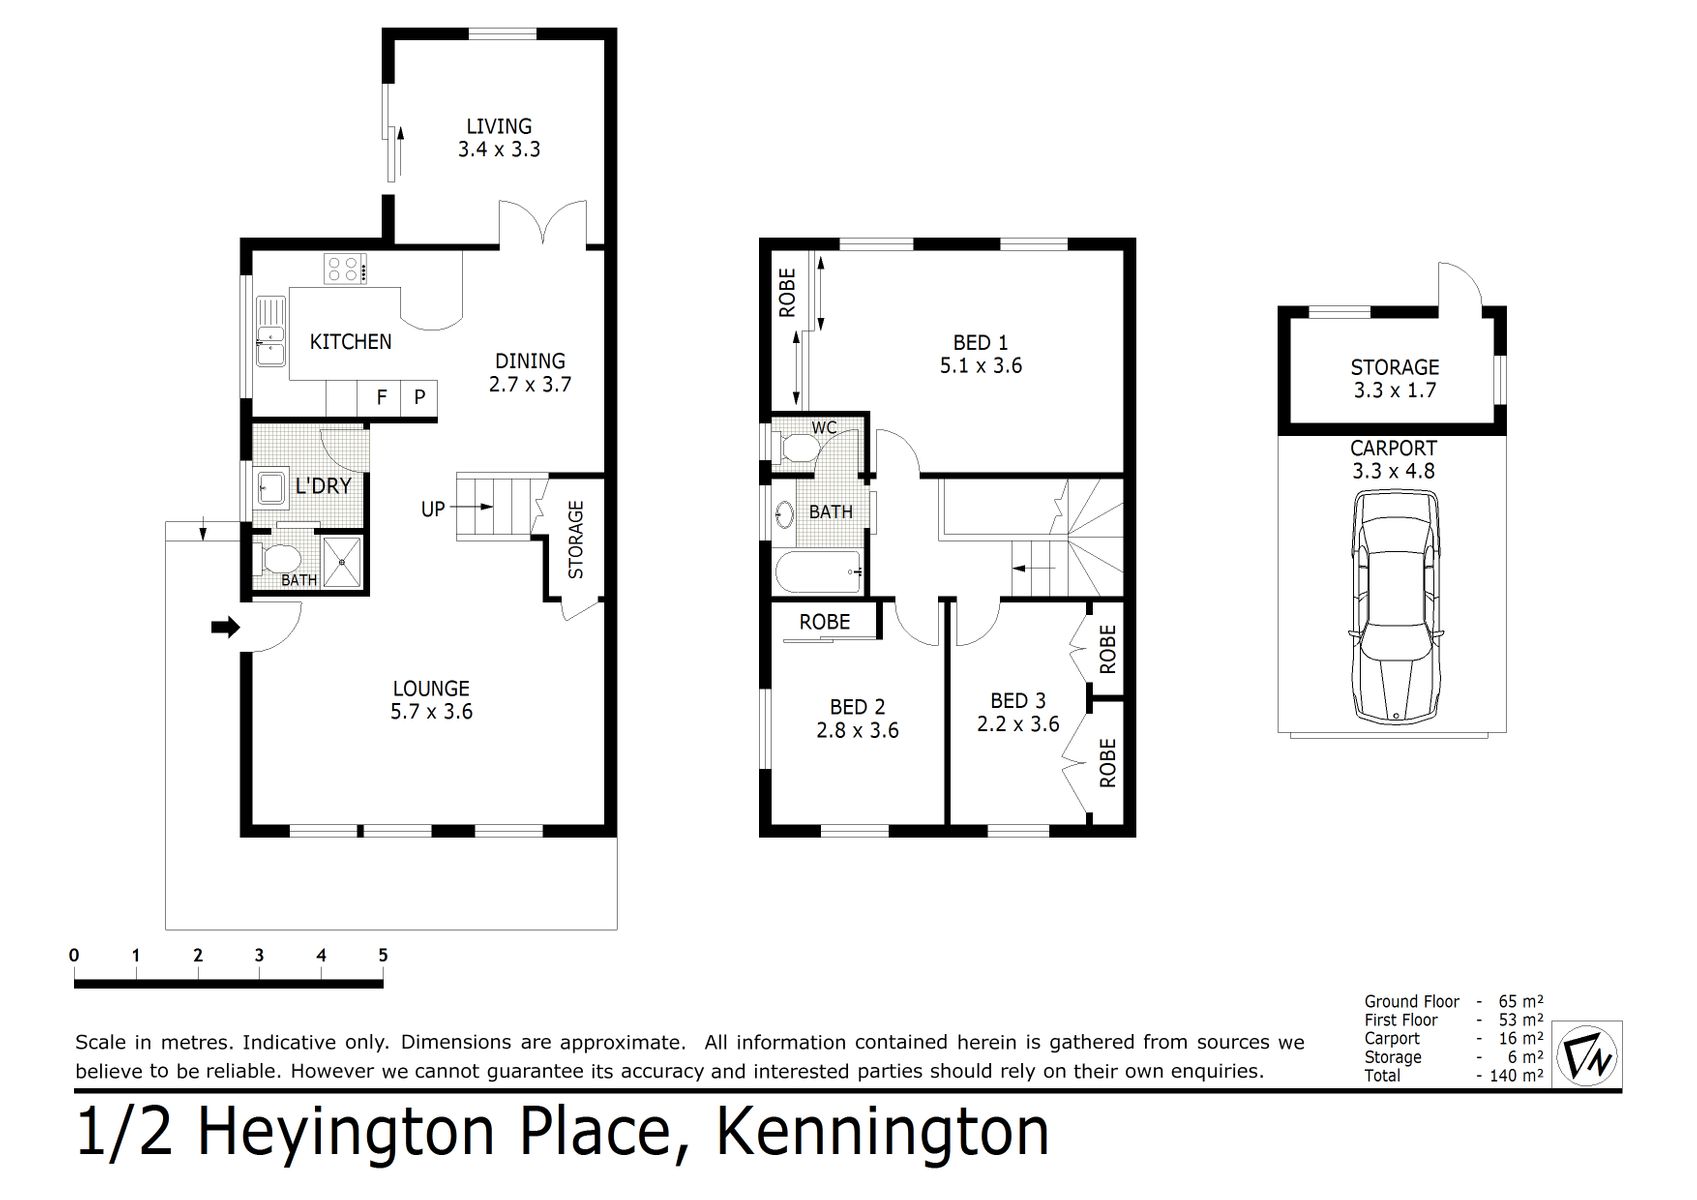 1 2 Heyington Place Kennington (21 OCT 2020) 118sqm